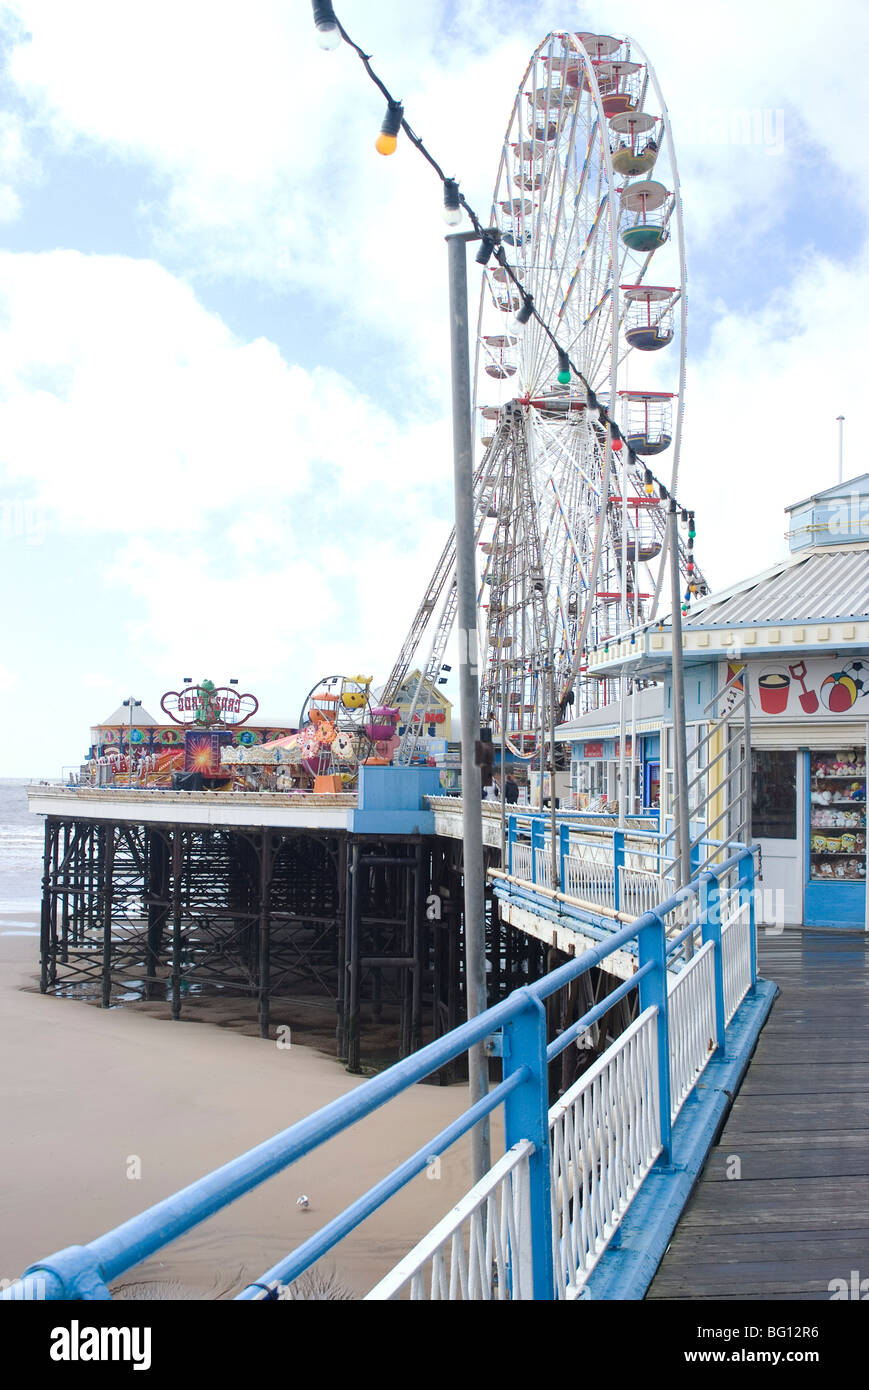 Le Central Pier, Blackpool, Lancashire, Angleterre, Royaume-Uni, Europe Banque D'Images